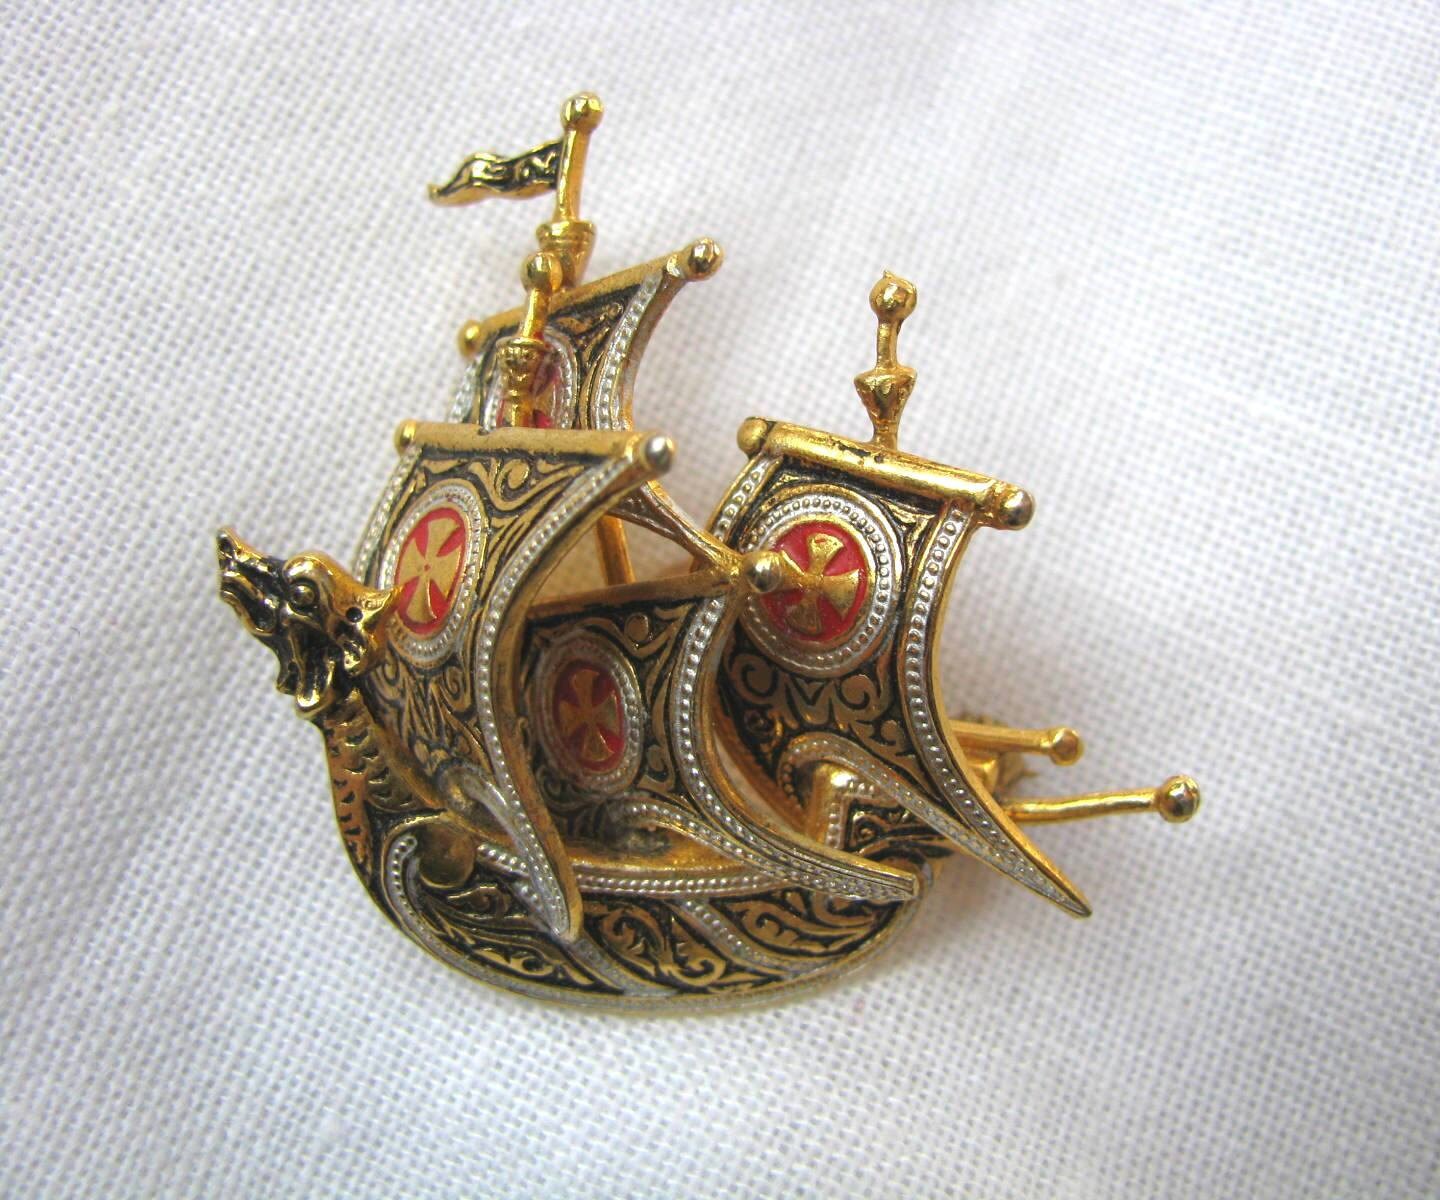 Pin. Brooch. Damascene Viking ship by PinMePins on Etsy